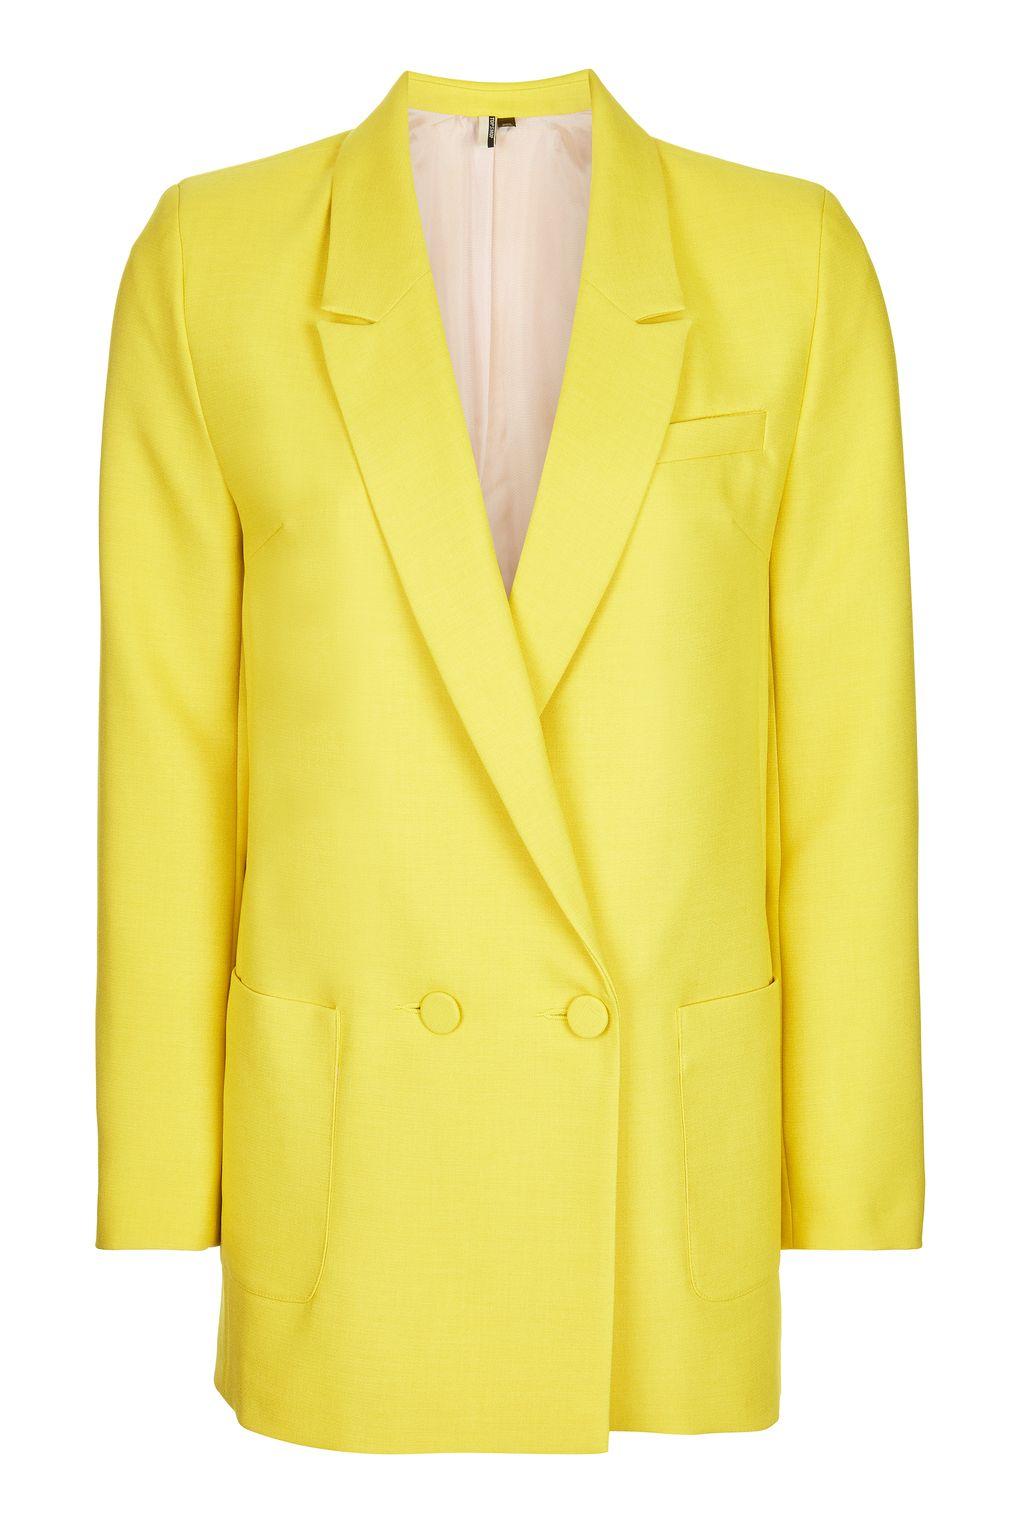 Lyst - Topshop Oversized Suit Blazer in Yellow